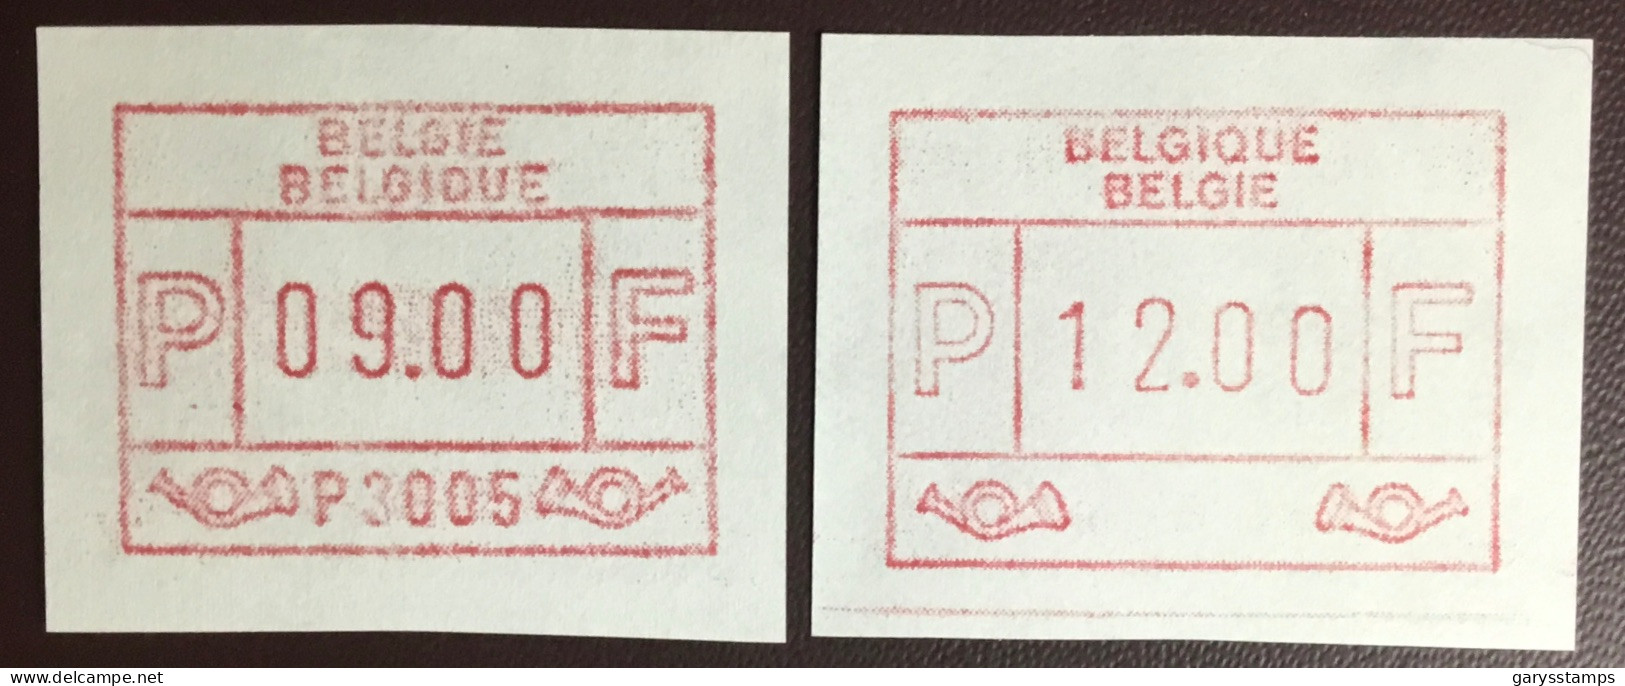 Belgium 1984 ATM Machine Stamps MNH - Mint